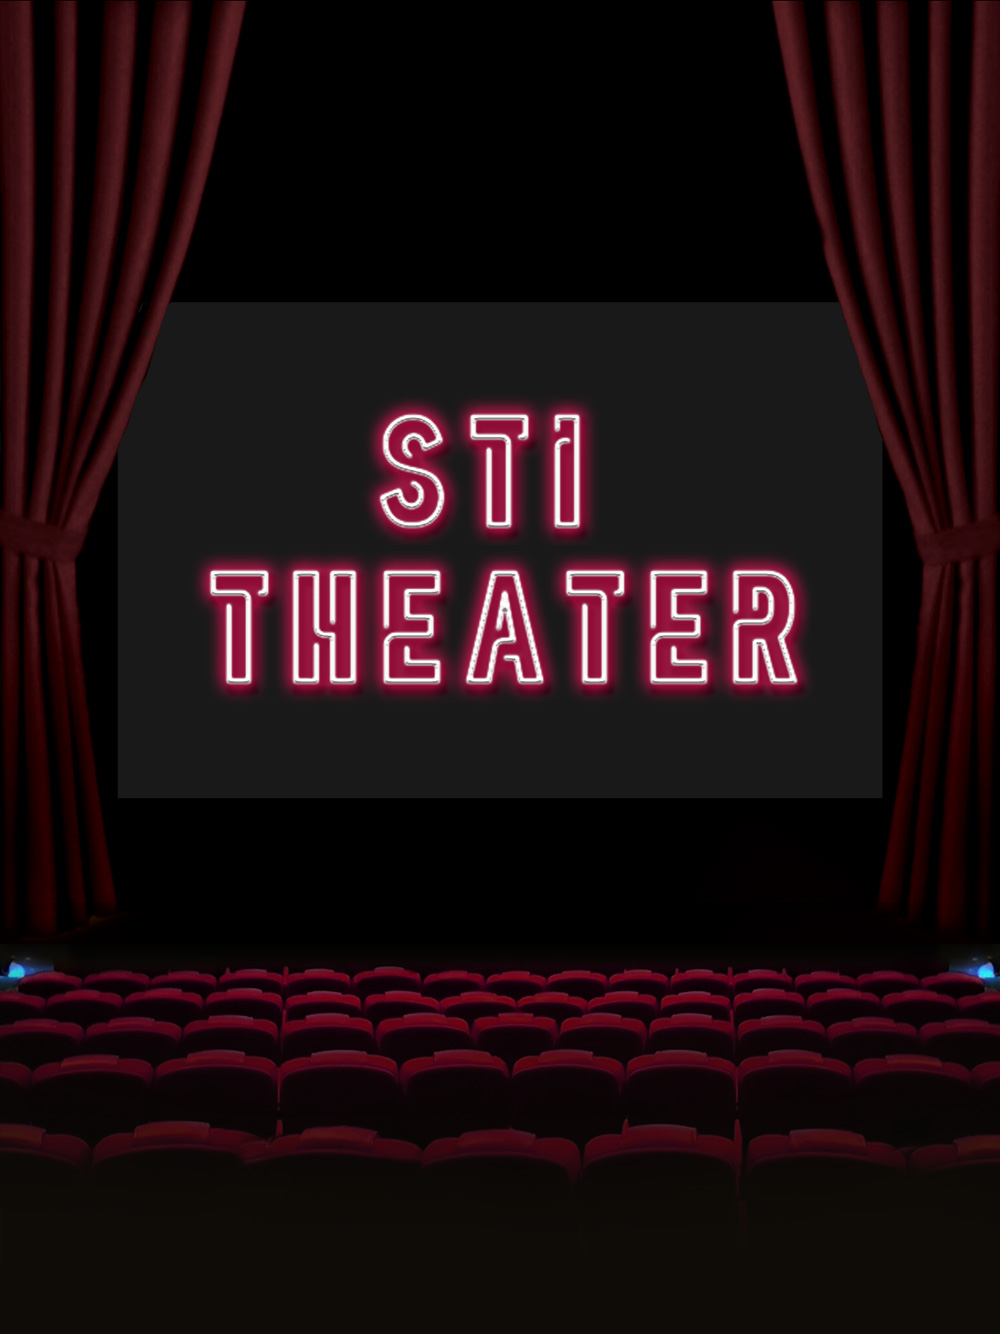 sti_theater